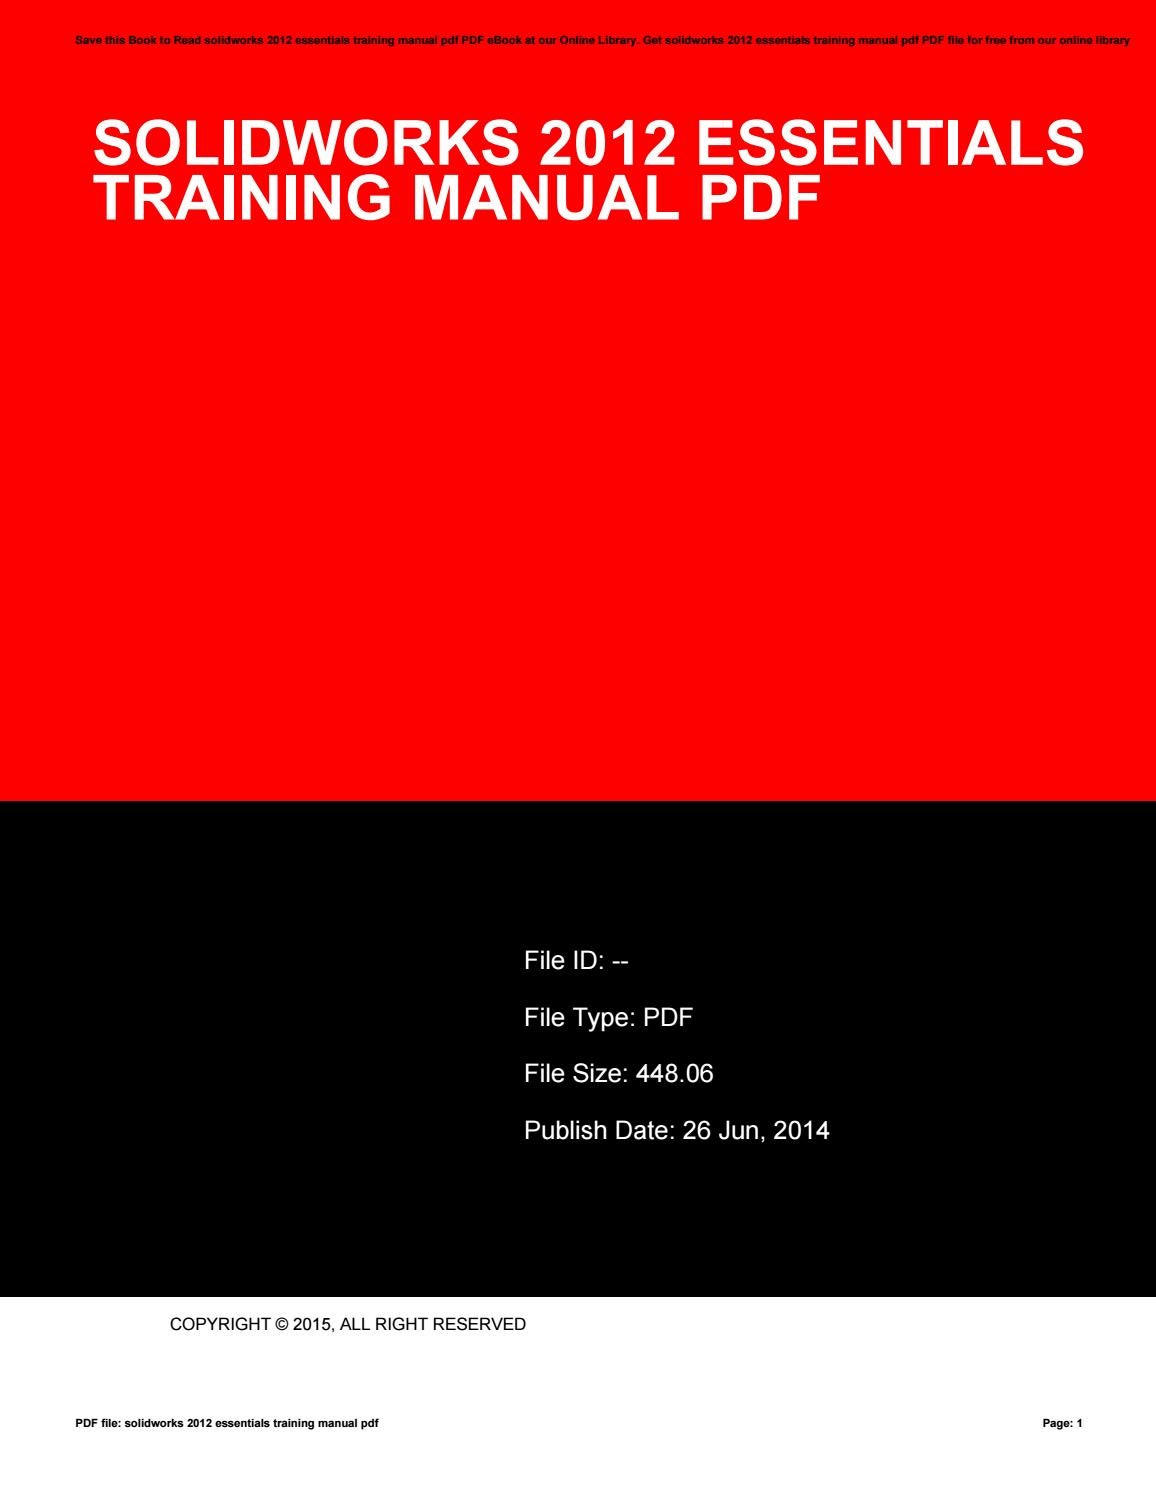 Solidworks essentials training manual pdf 2016